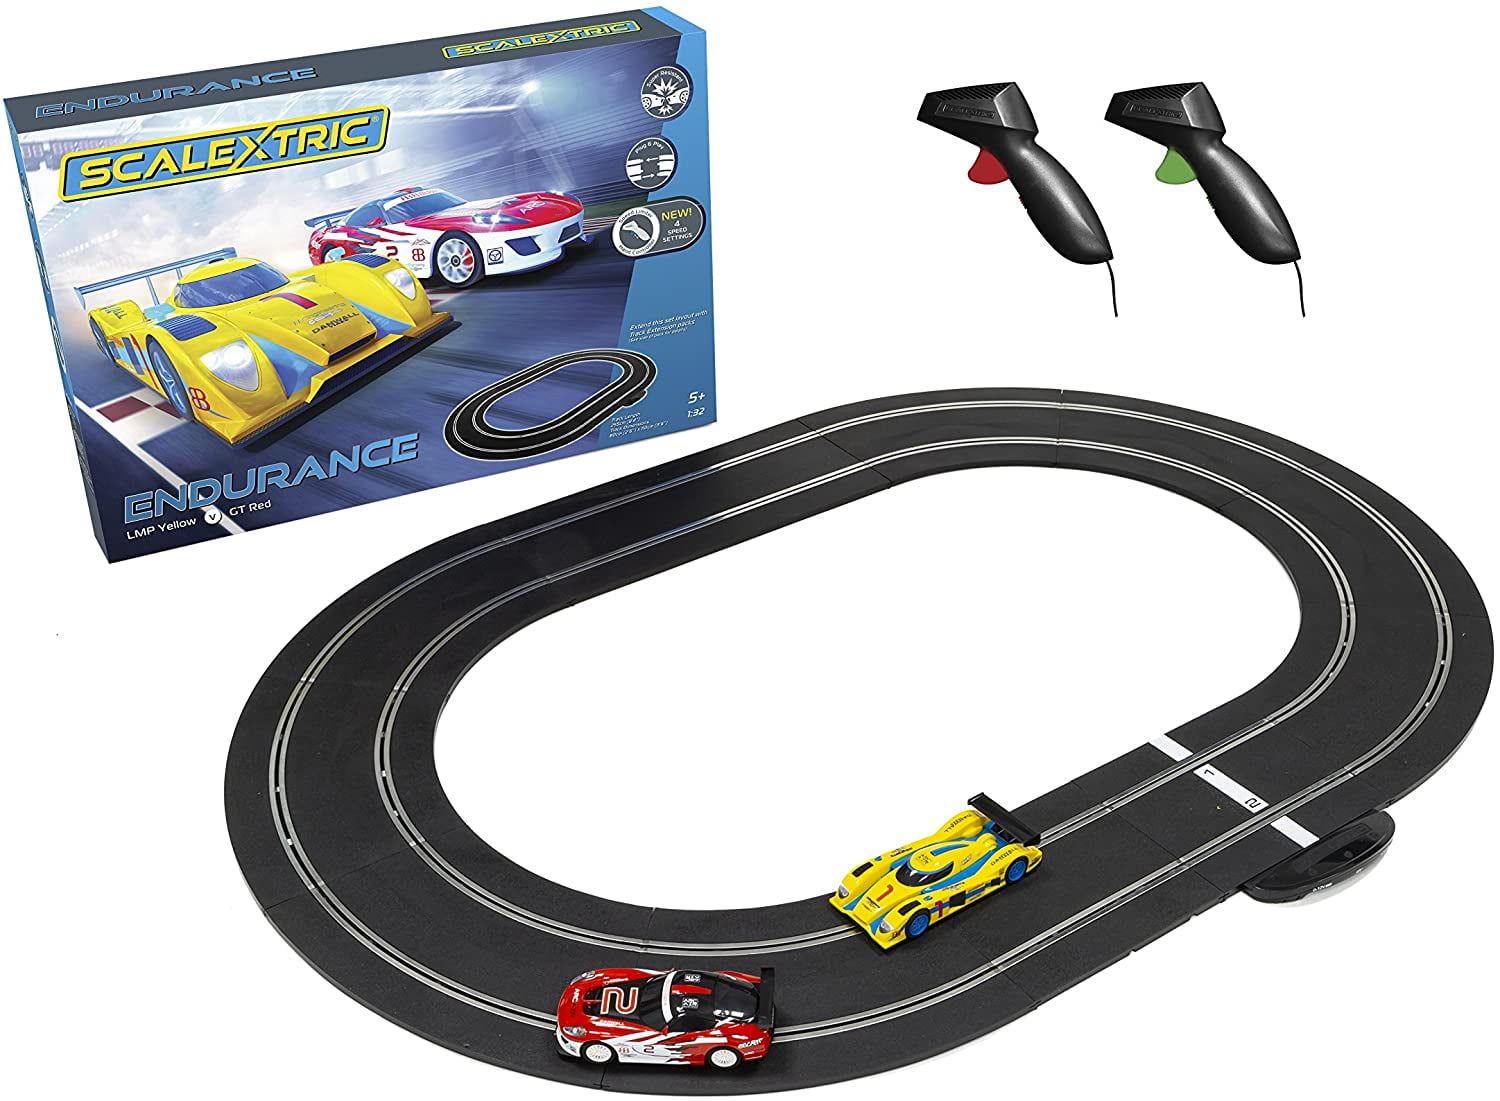 Scalextric Stock Car Challenge 1:32 Race Track Slot Car Set C1383T -  Walmart.com